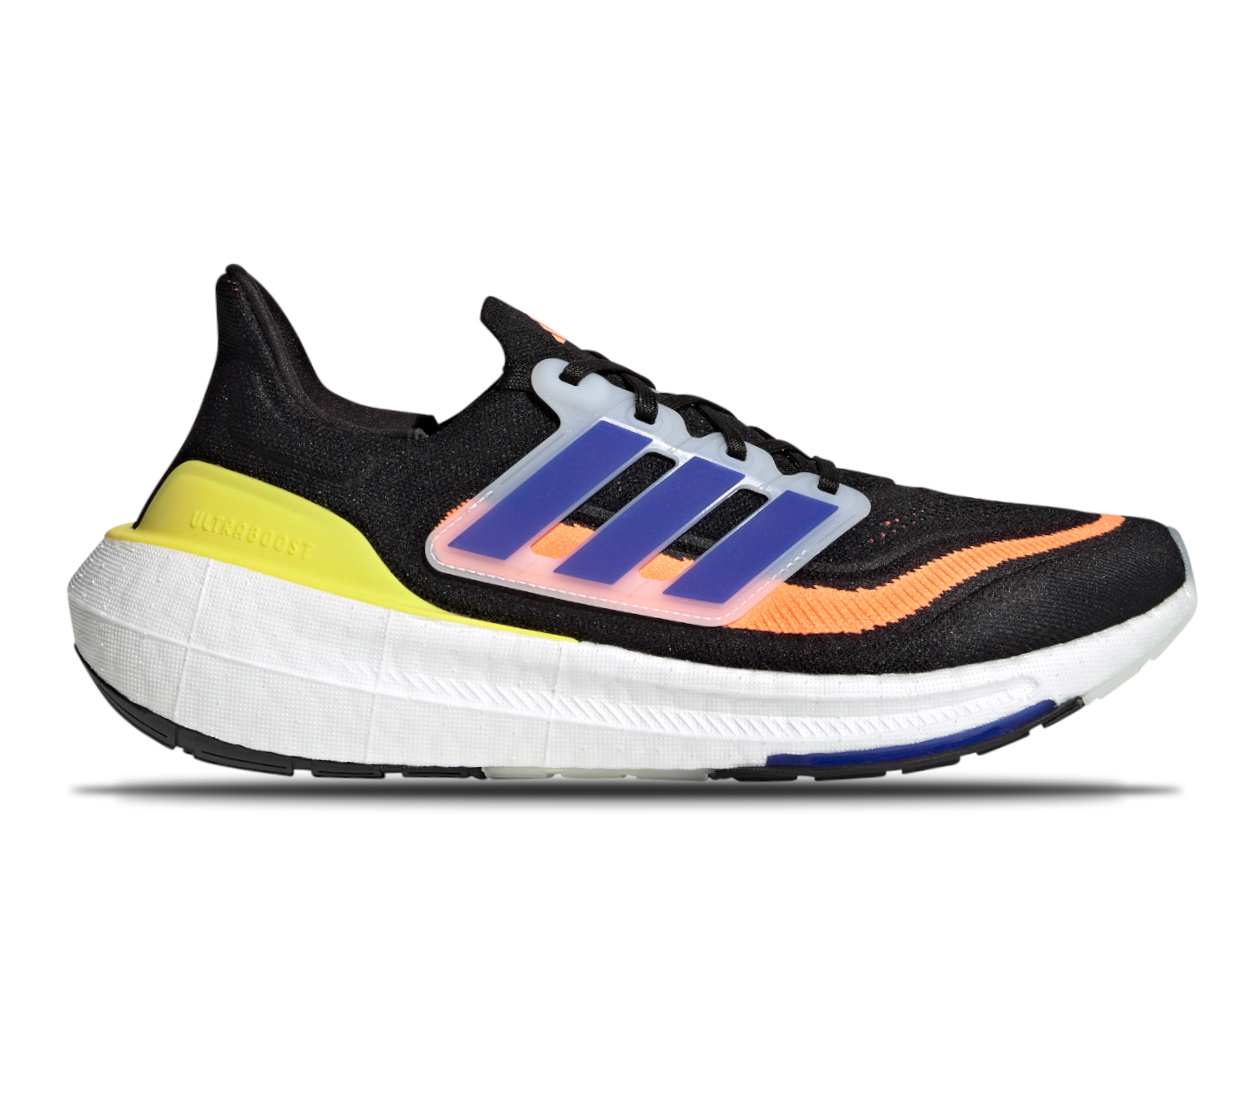 Adidas Ultraboost Light (U) scarpa leggera e energetica | LBM Sport